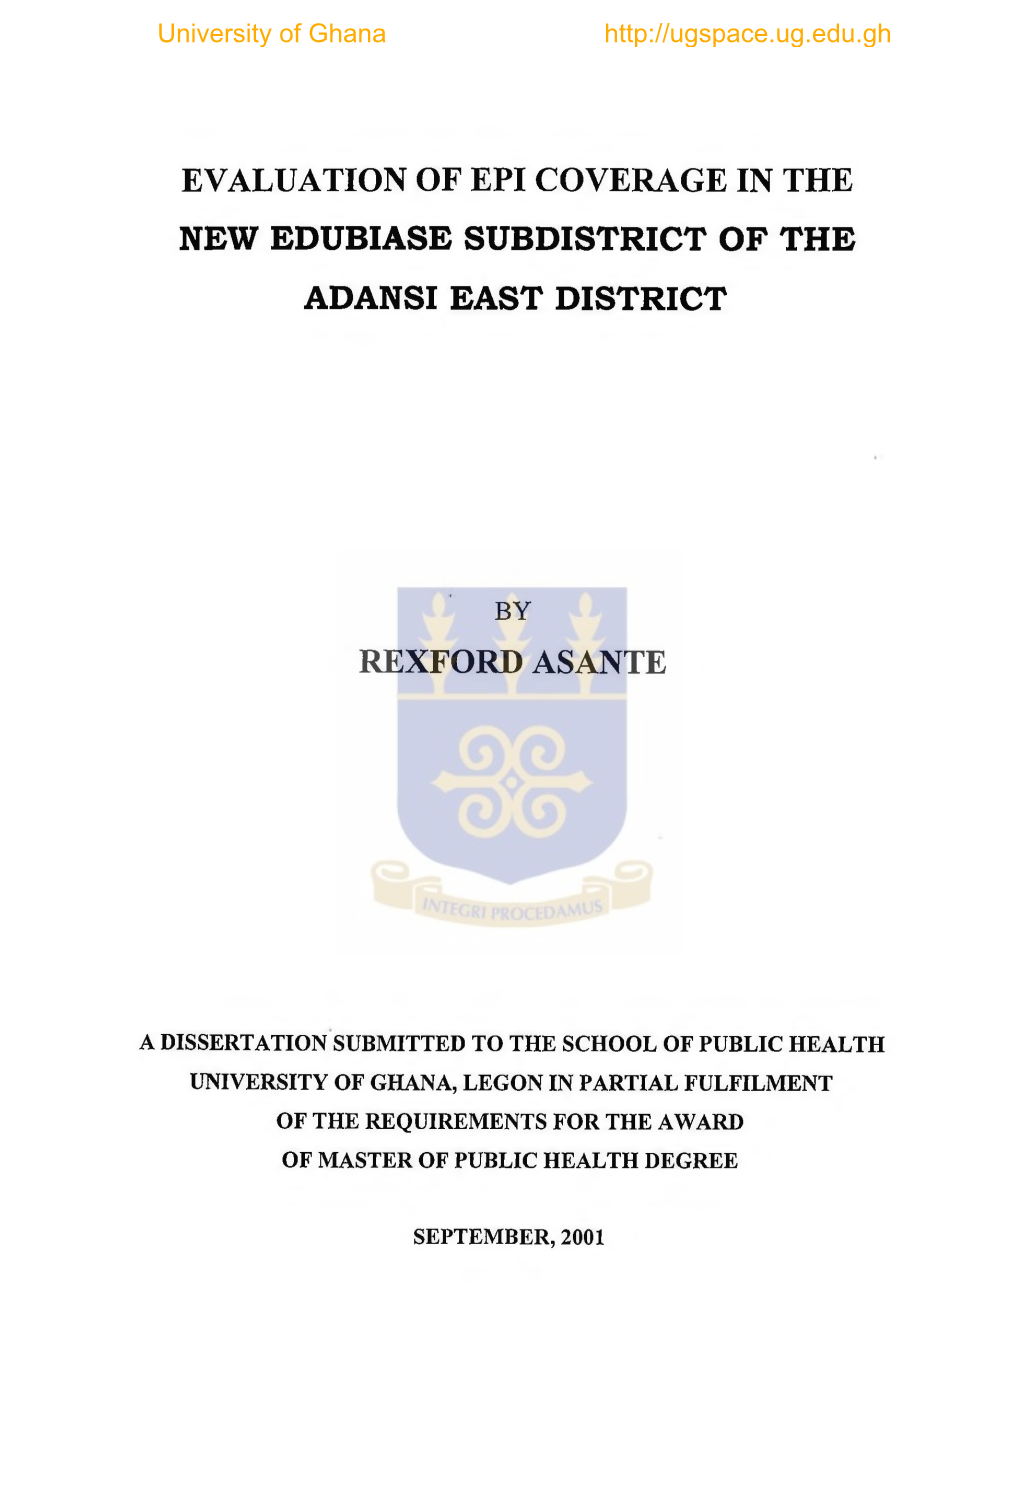 New Edubiase Subdistrict of the Adansi East District